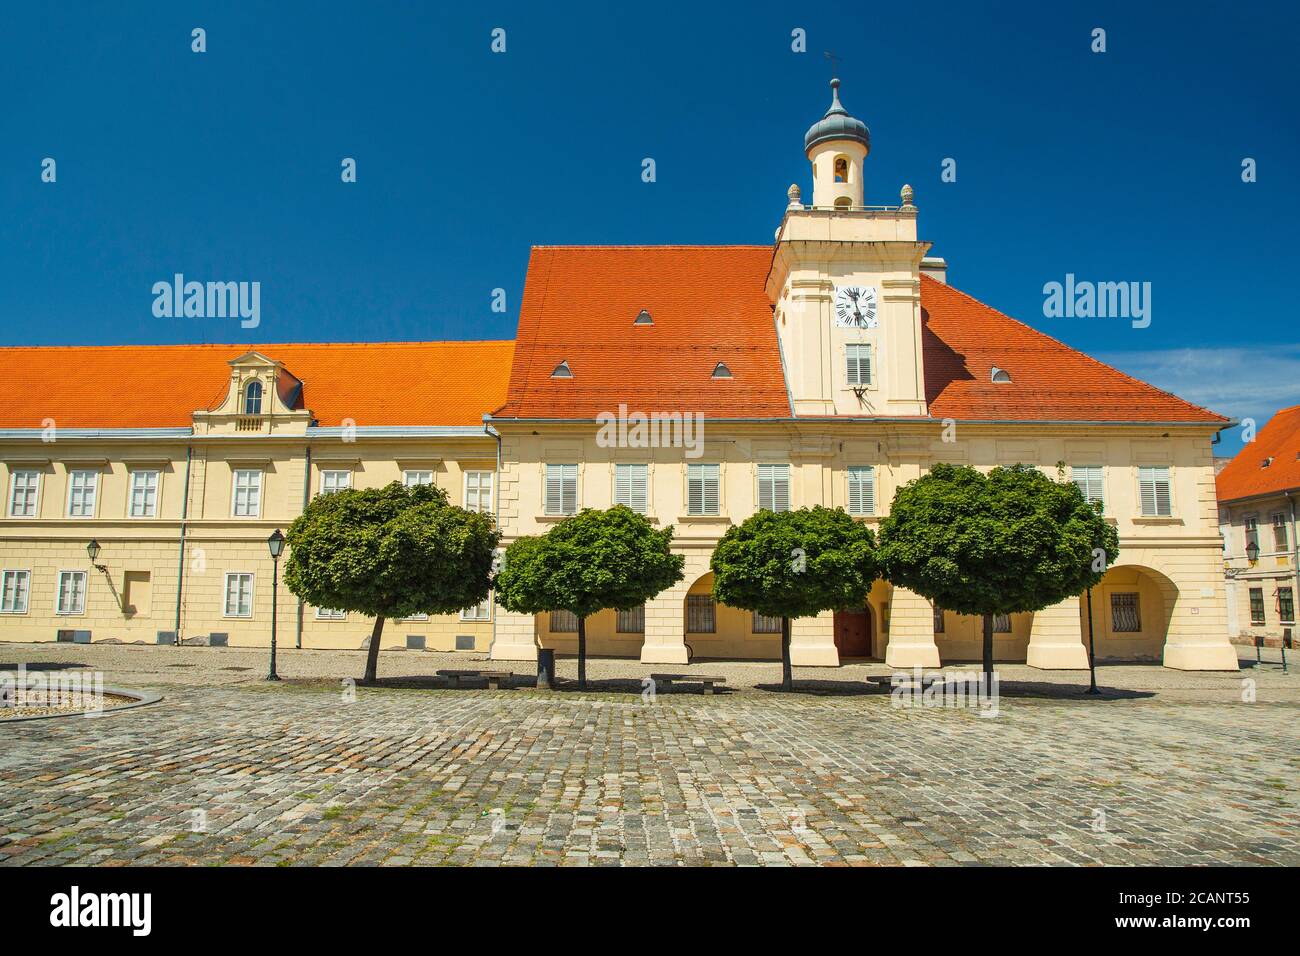 Holy trinity square in Tvrdja, old historic town of Osijek, Croatia Stock Photo